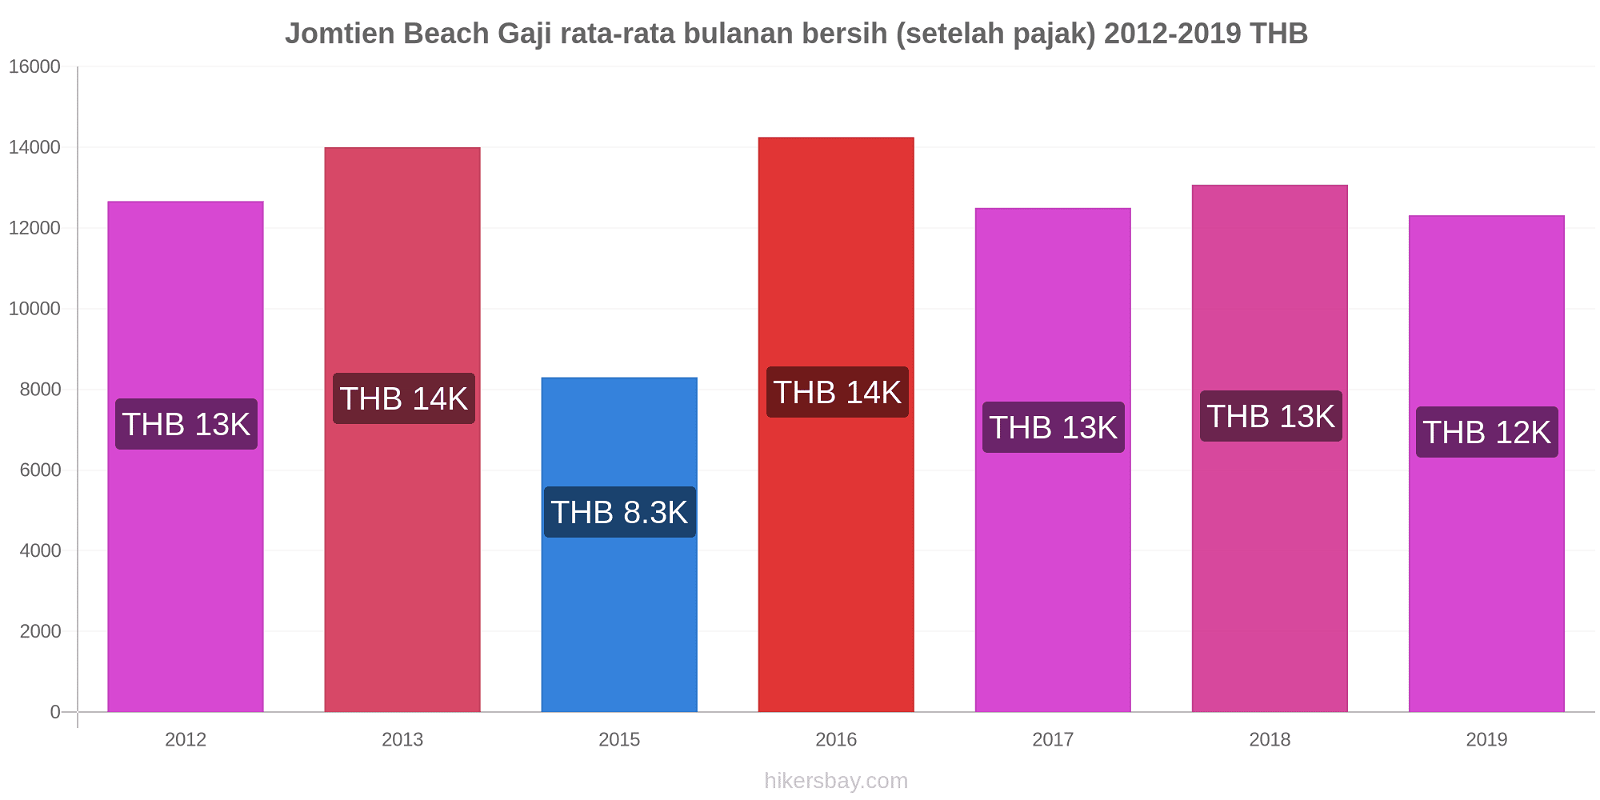 Jomtien Beach perubahan harga Gaji rata-rata bulanan bersih (setelah pajak) hikersbay.com